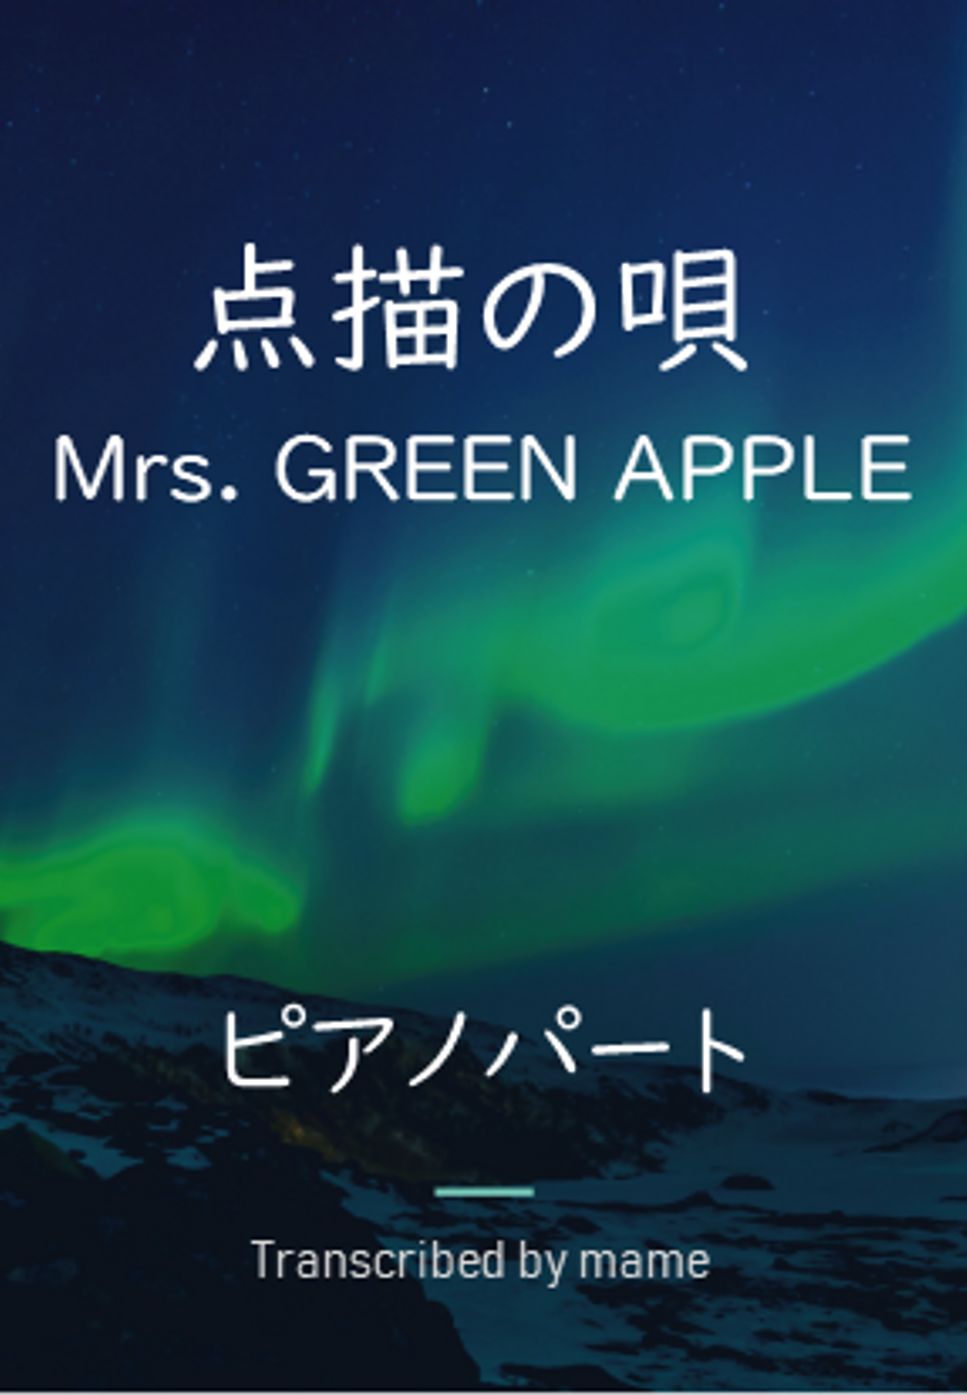 Mrs. GREEN APPLE - 点描の唄 (ピアノパート) by mame